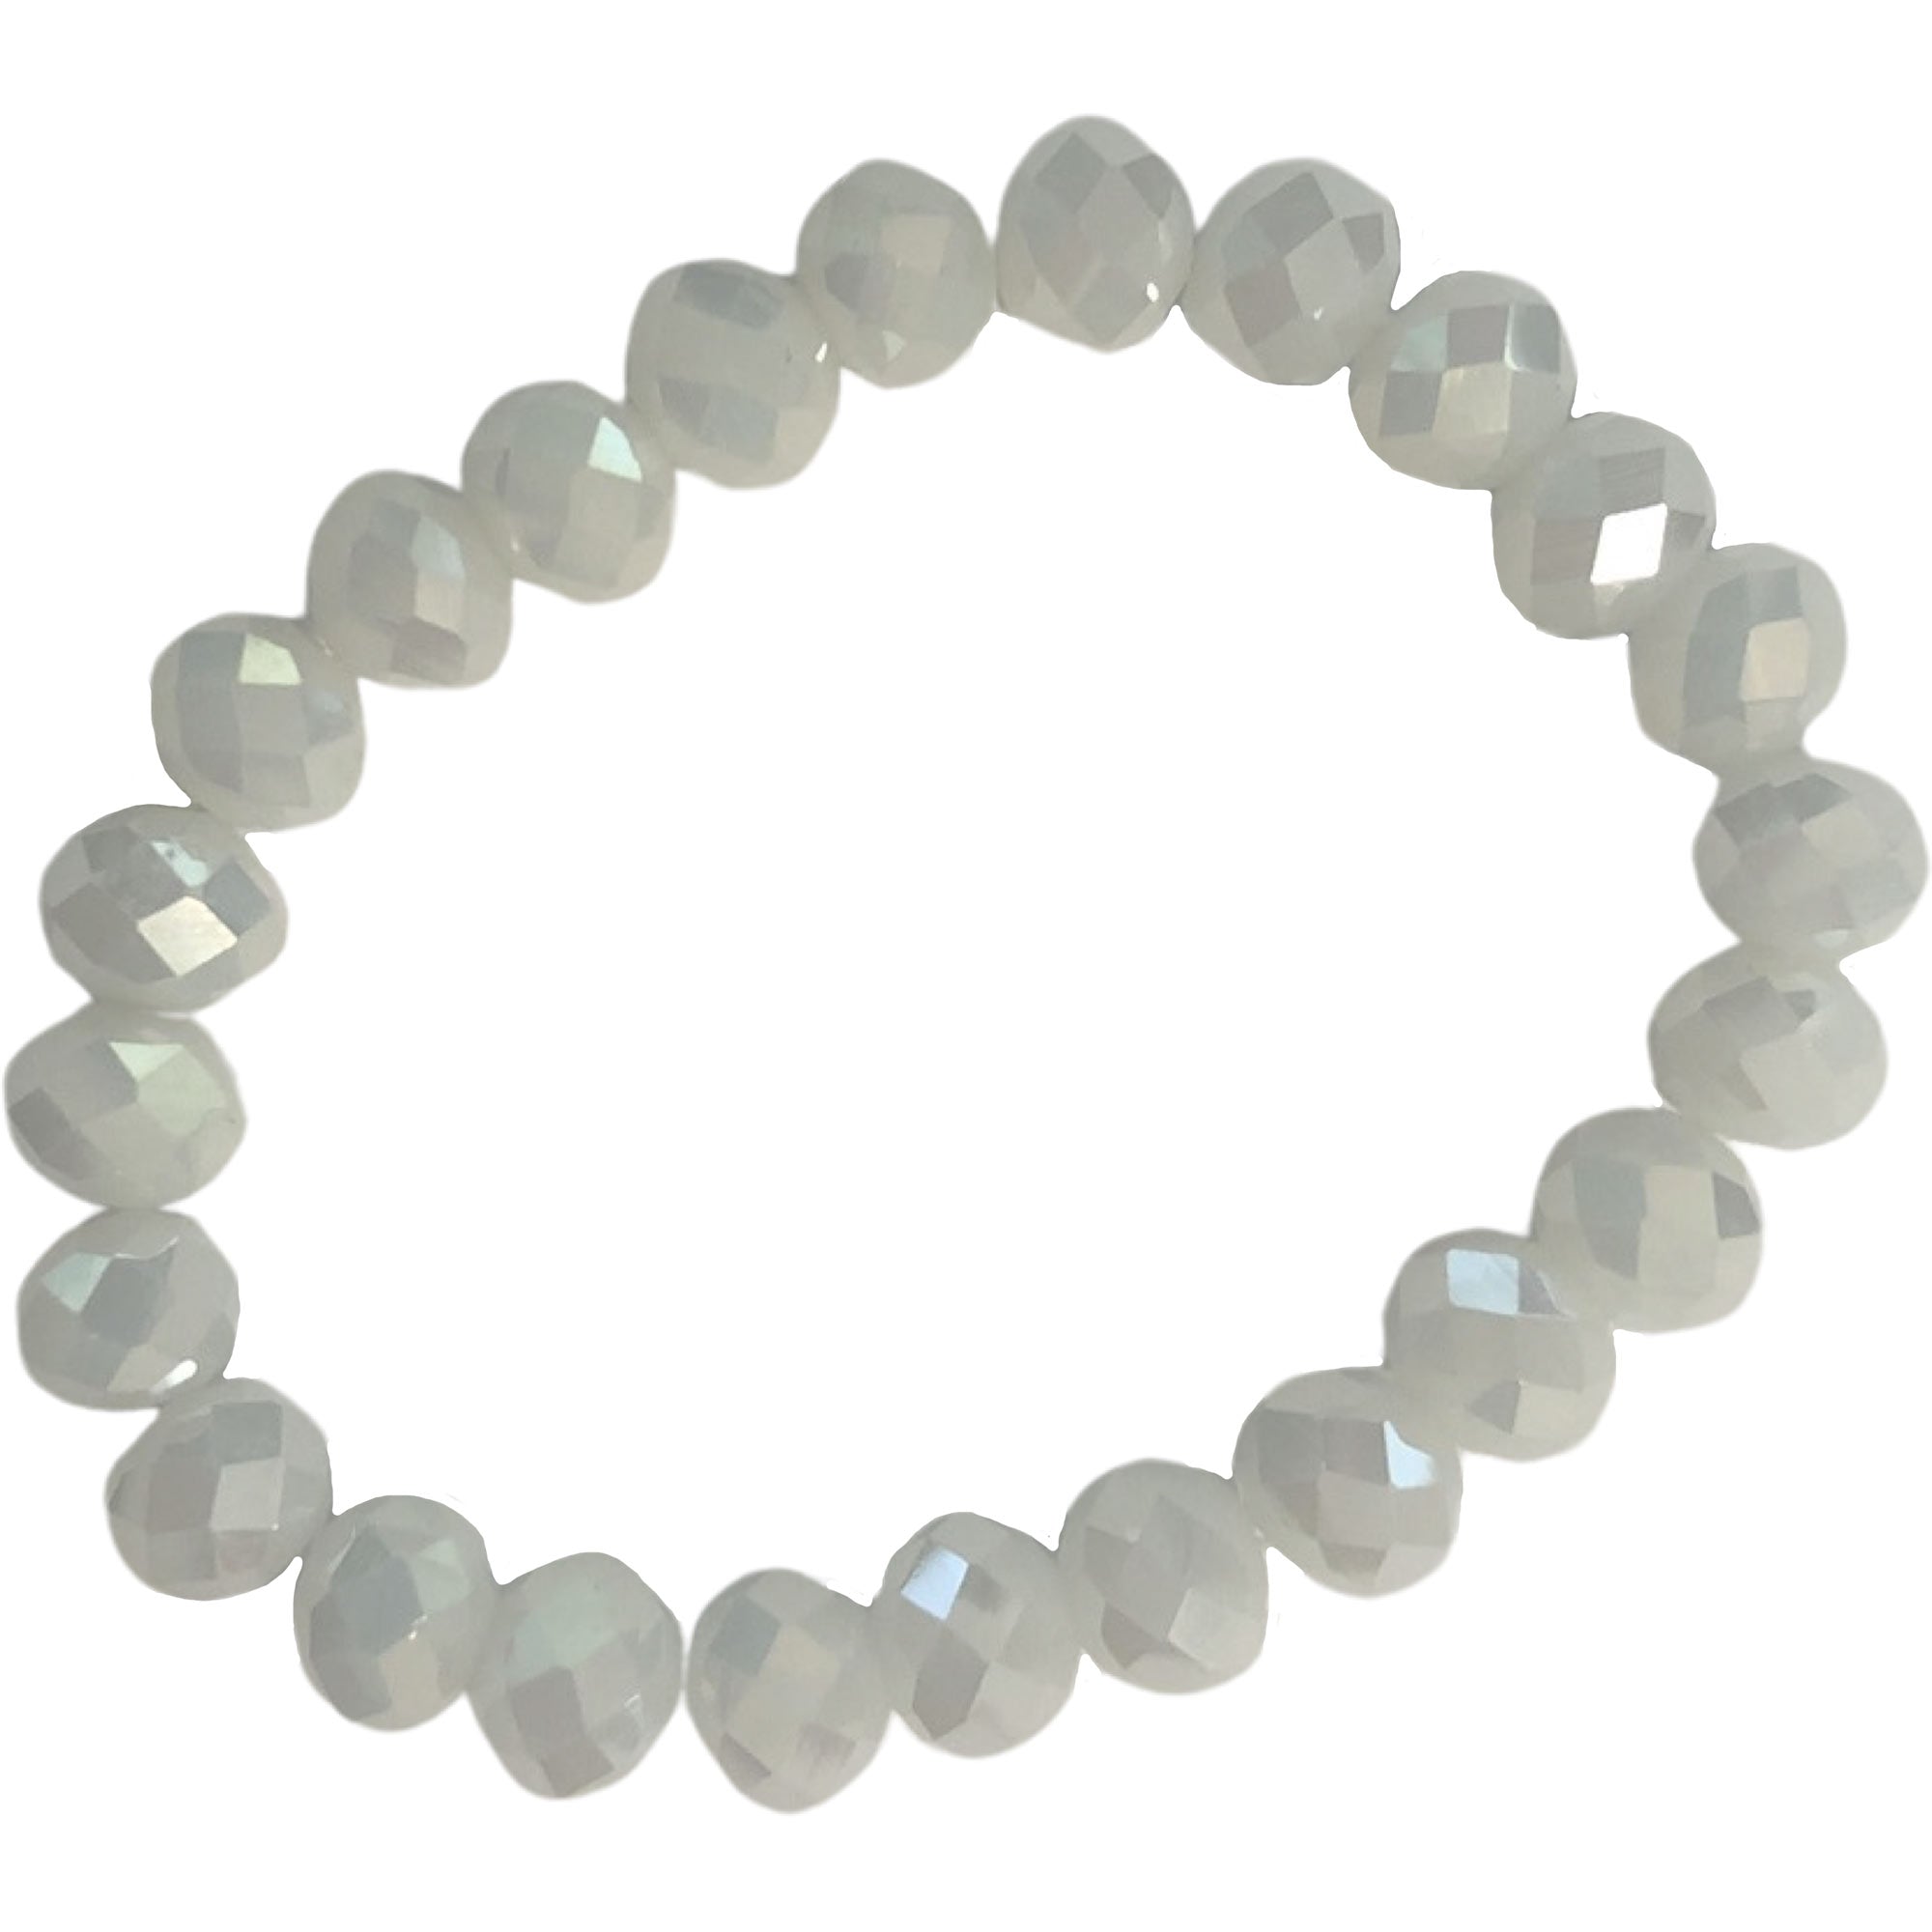 CLEARANCE CRYSTAL BRACELETS (CASE OF 240 - $0.25 / PIECE)  Wholesale Crystal Bracelets in Assorted Colors SKU: 50800-240